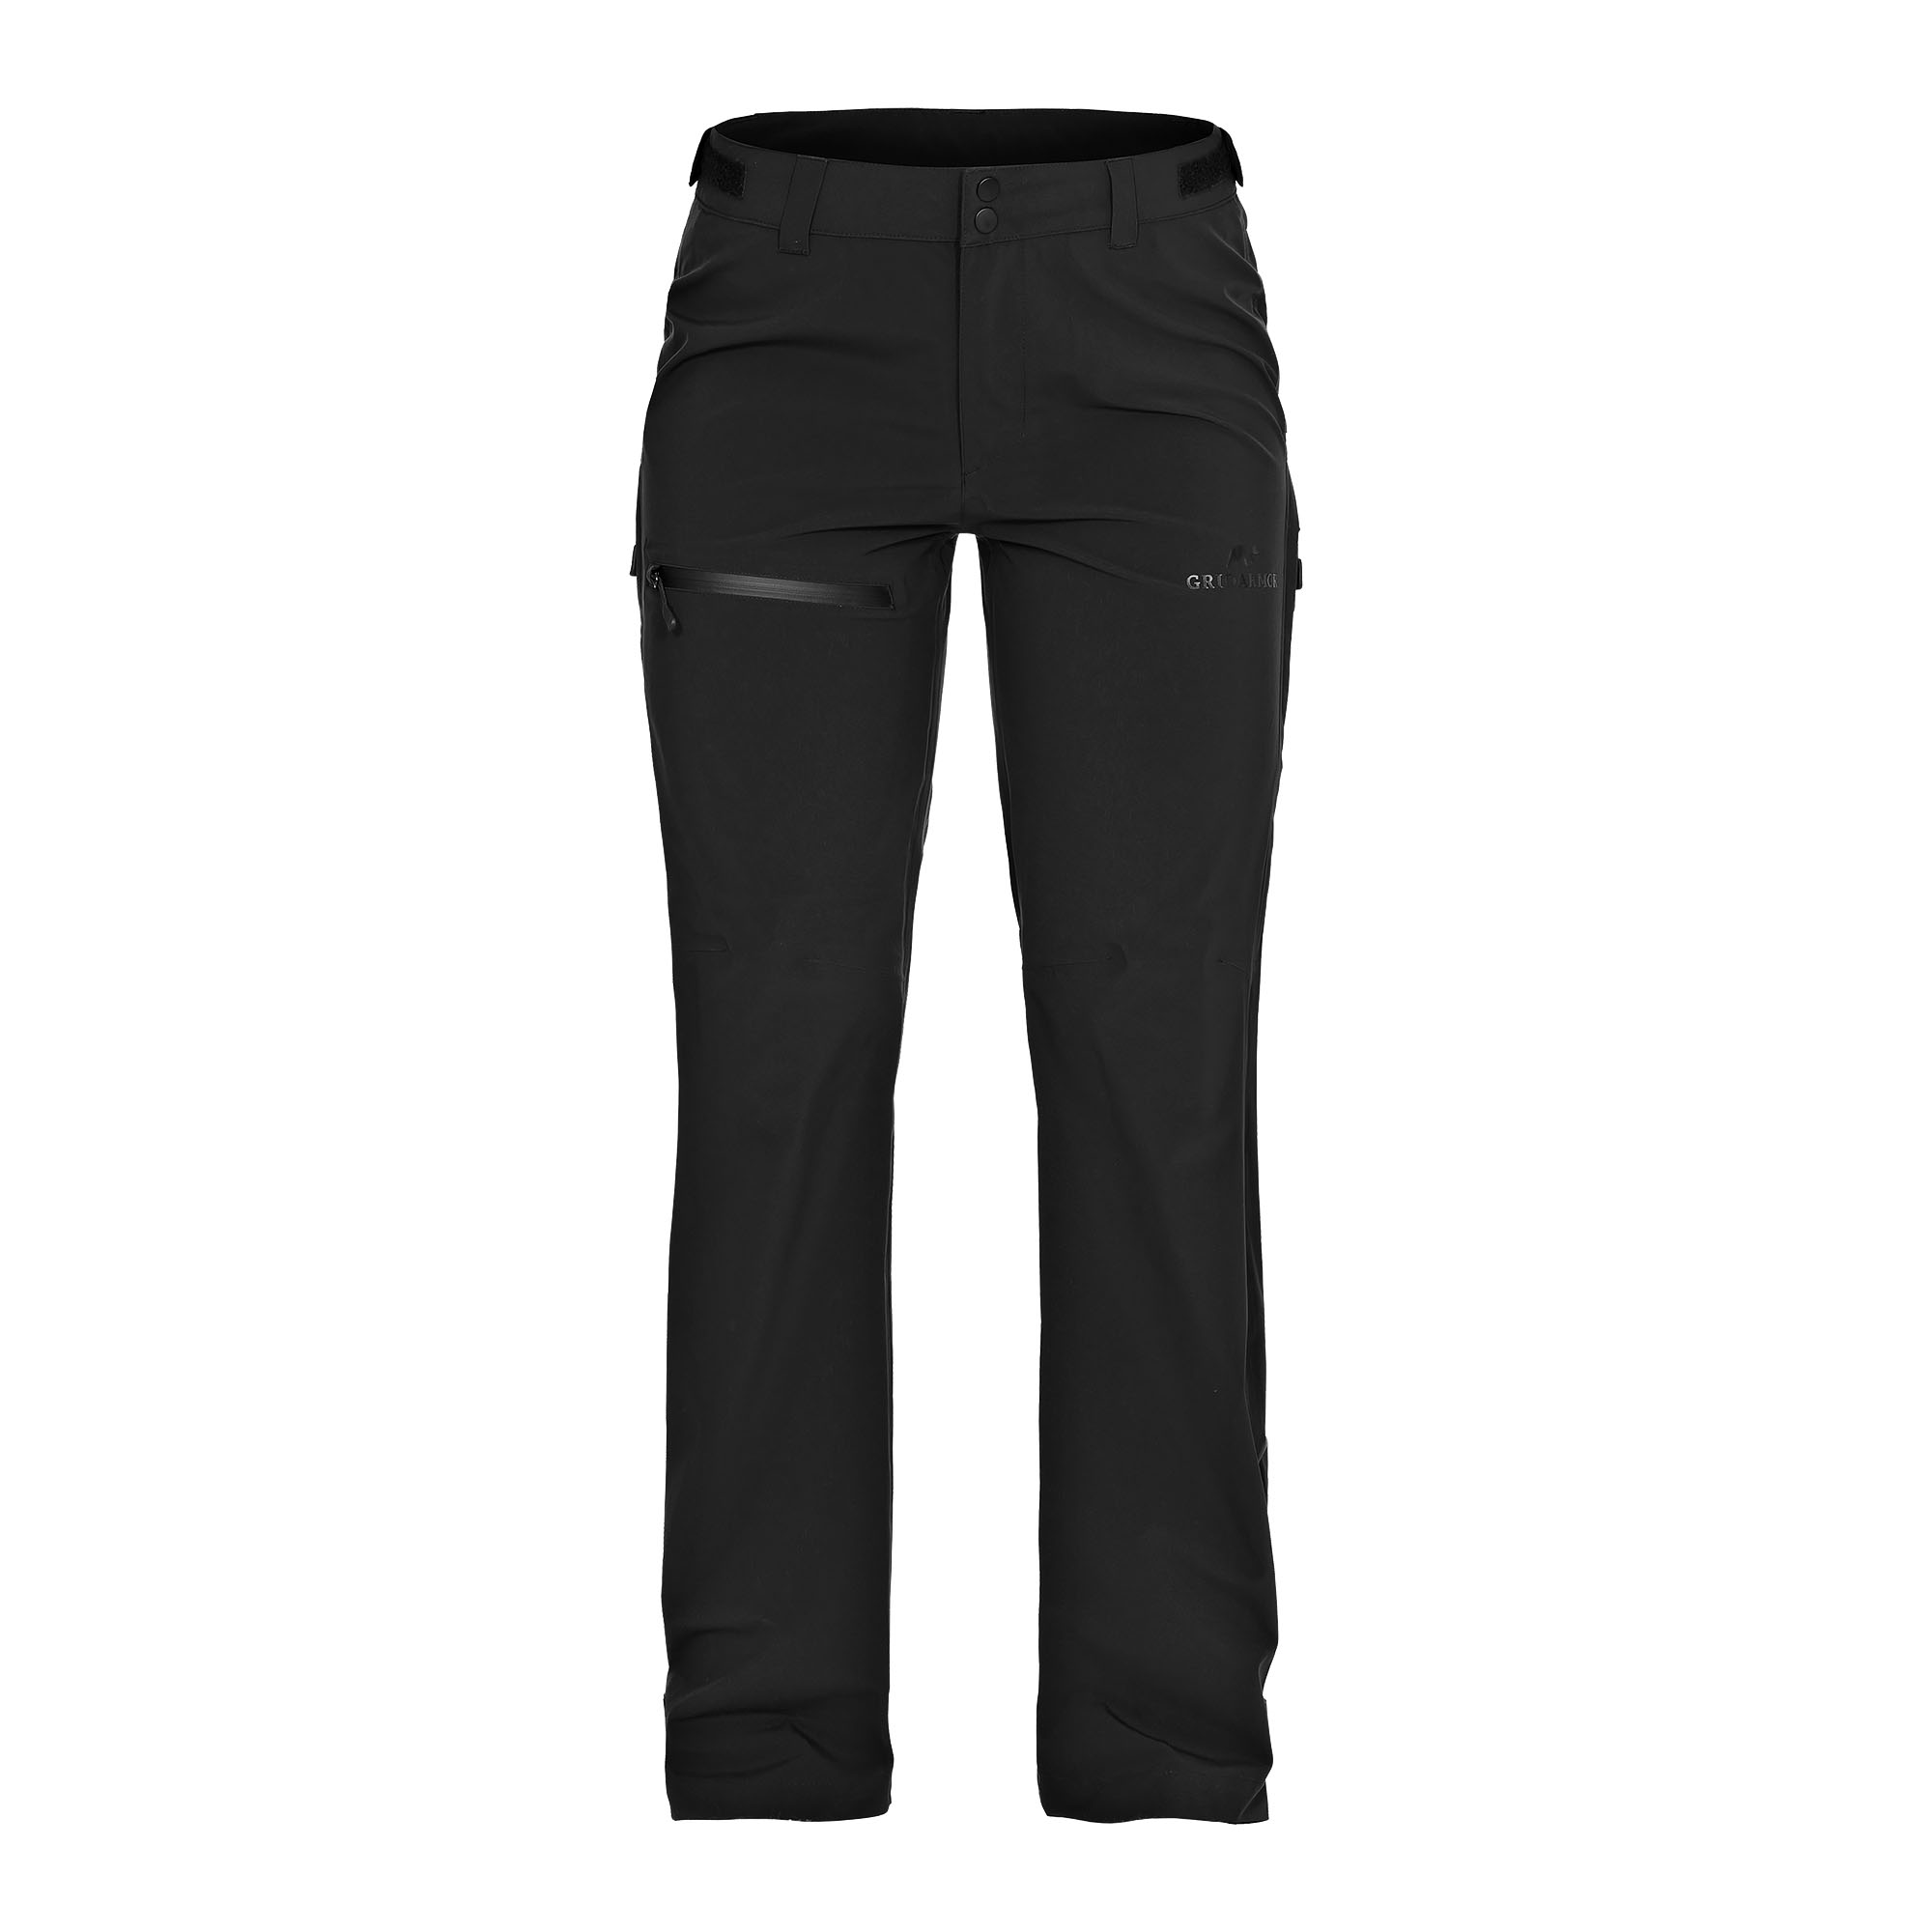 3 Layer Shell Pants Women's Jet black